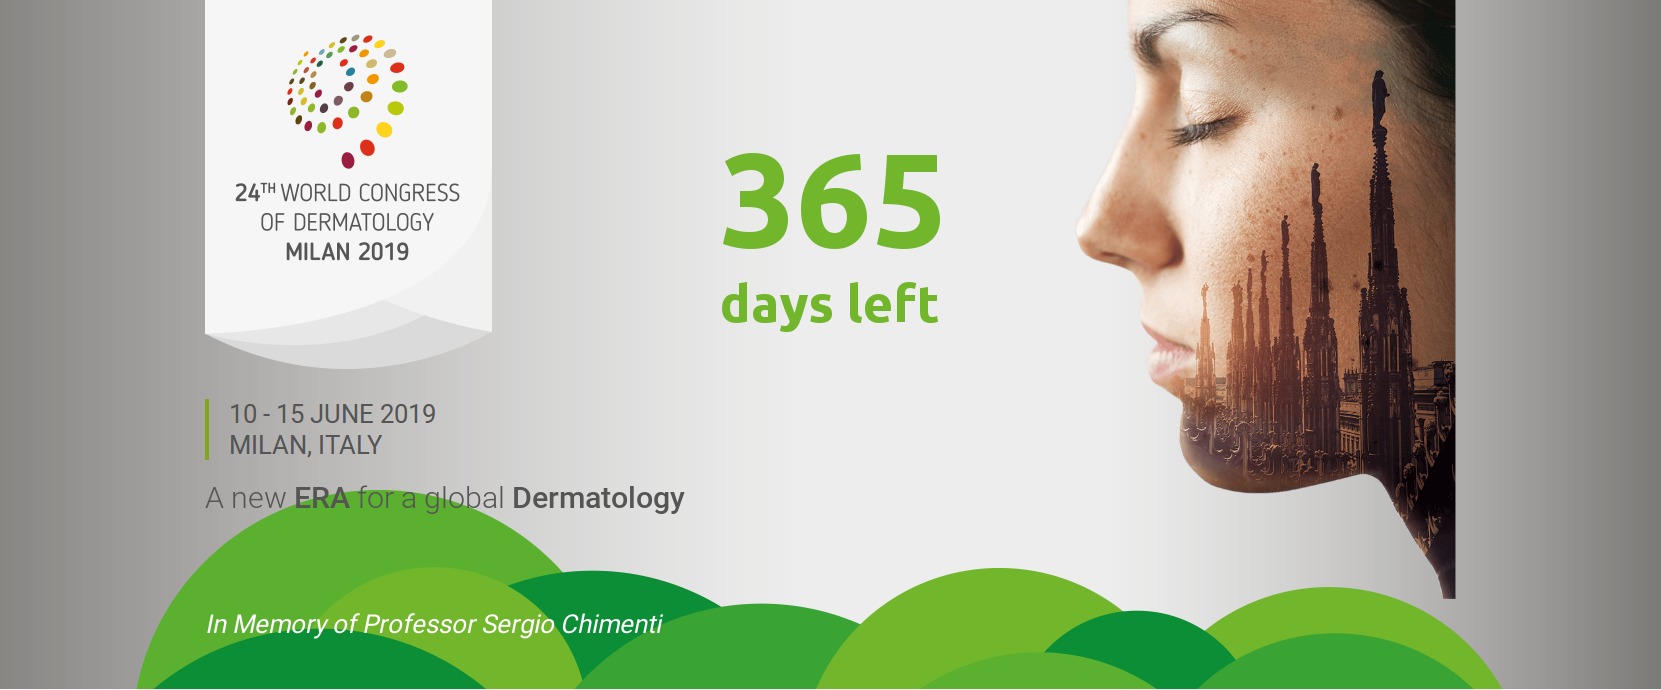 Mancano 365 giorni al 24° World Congress of Dermatology